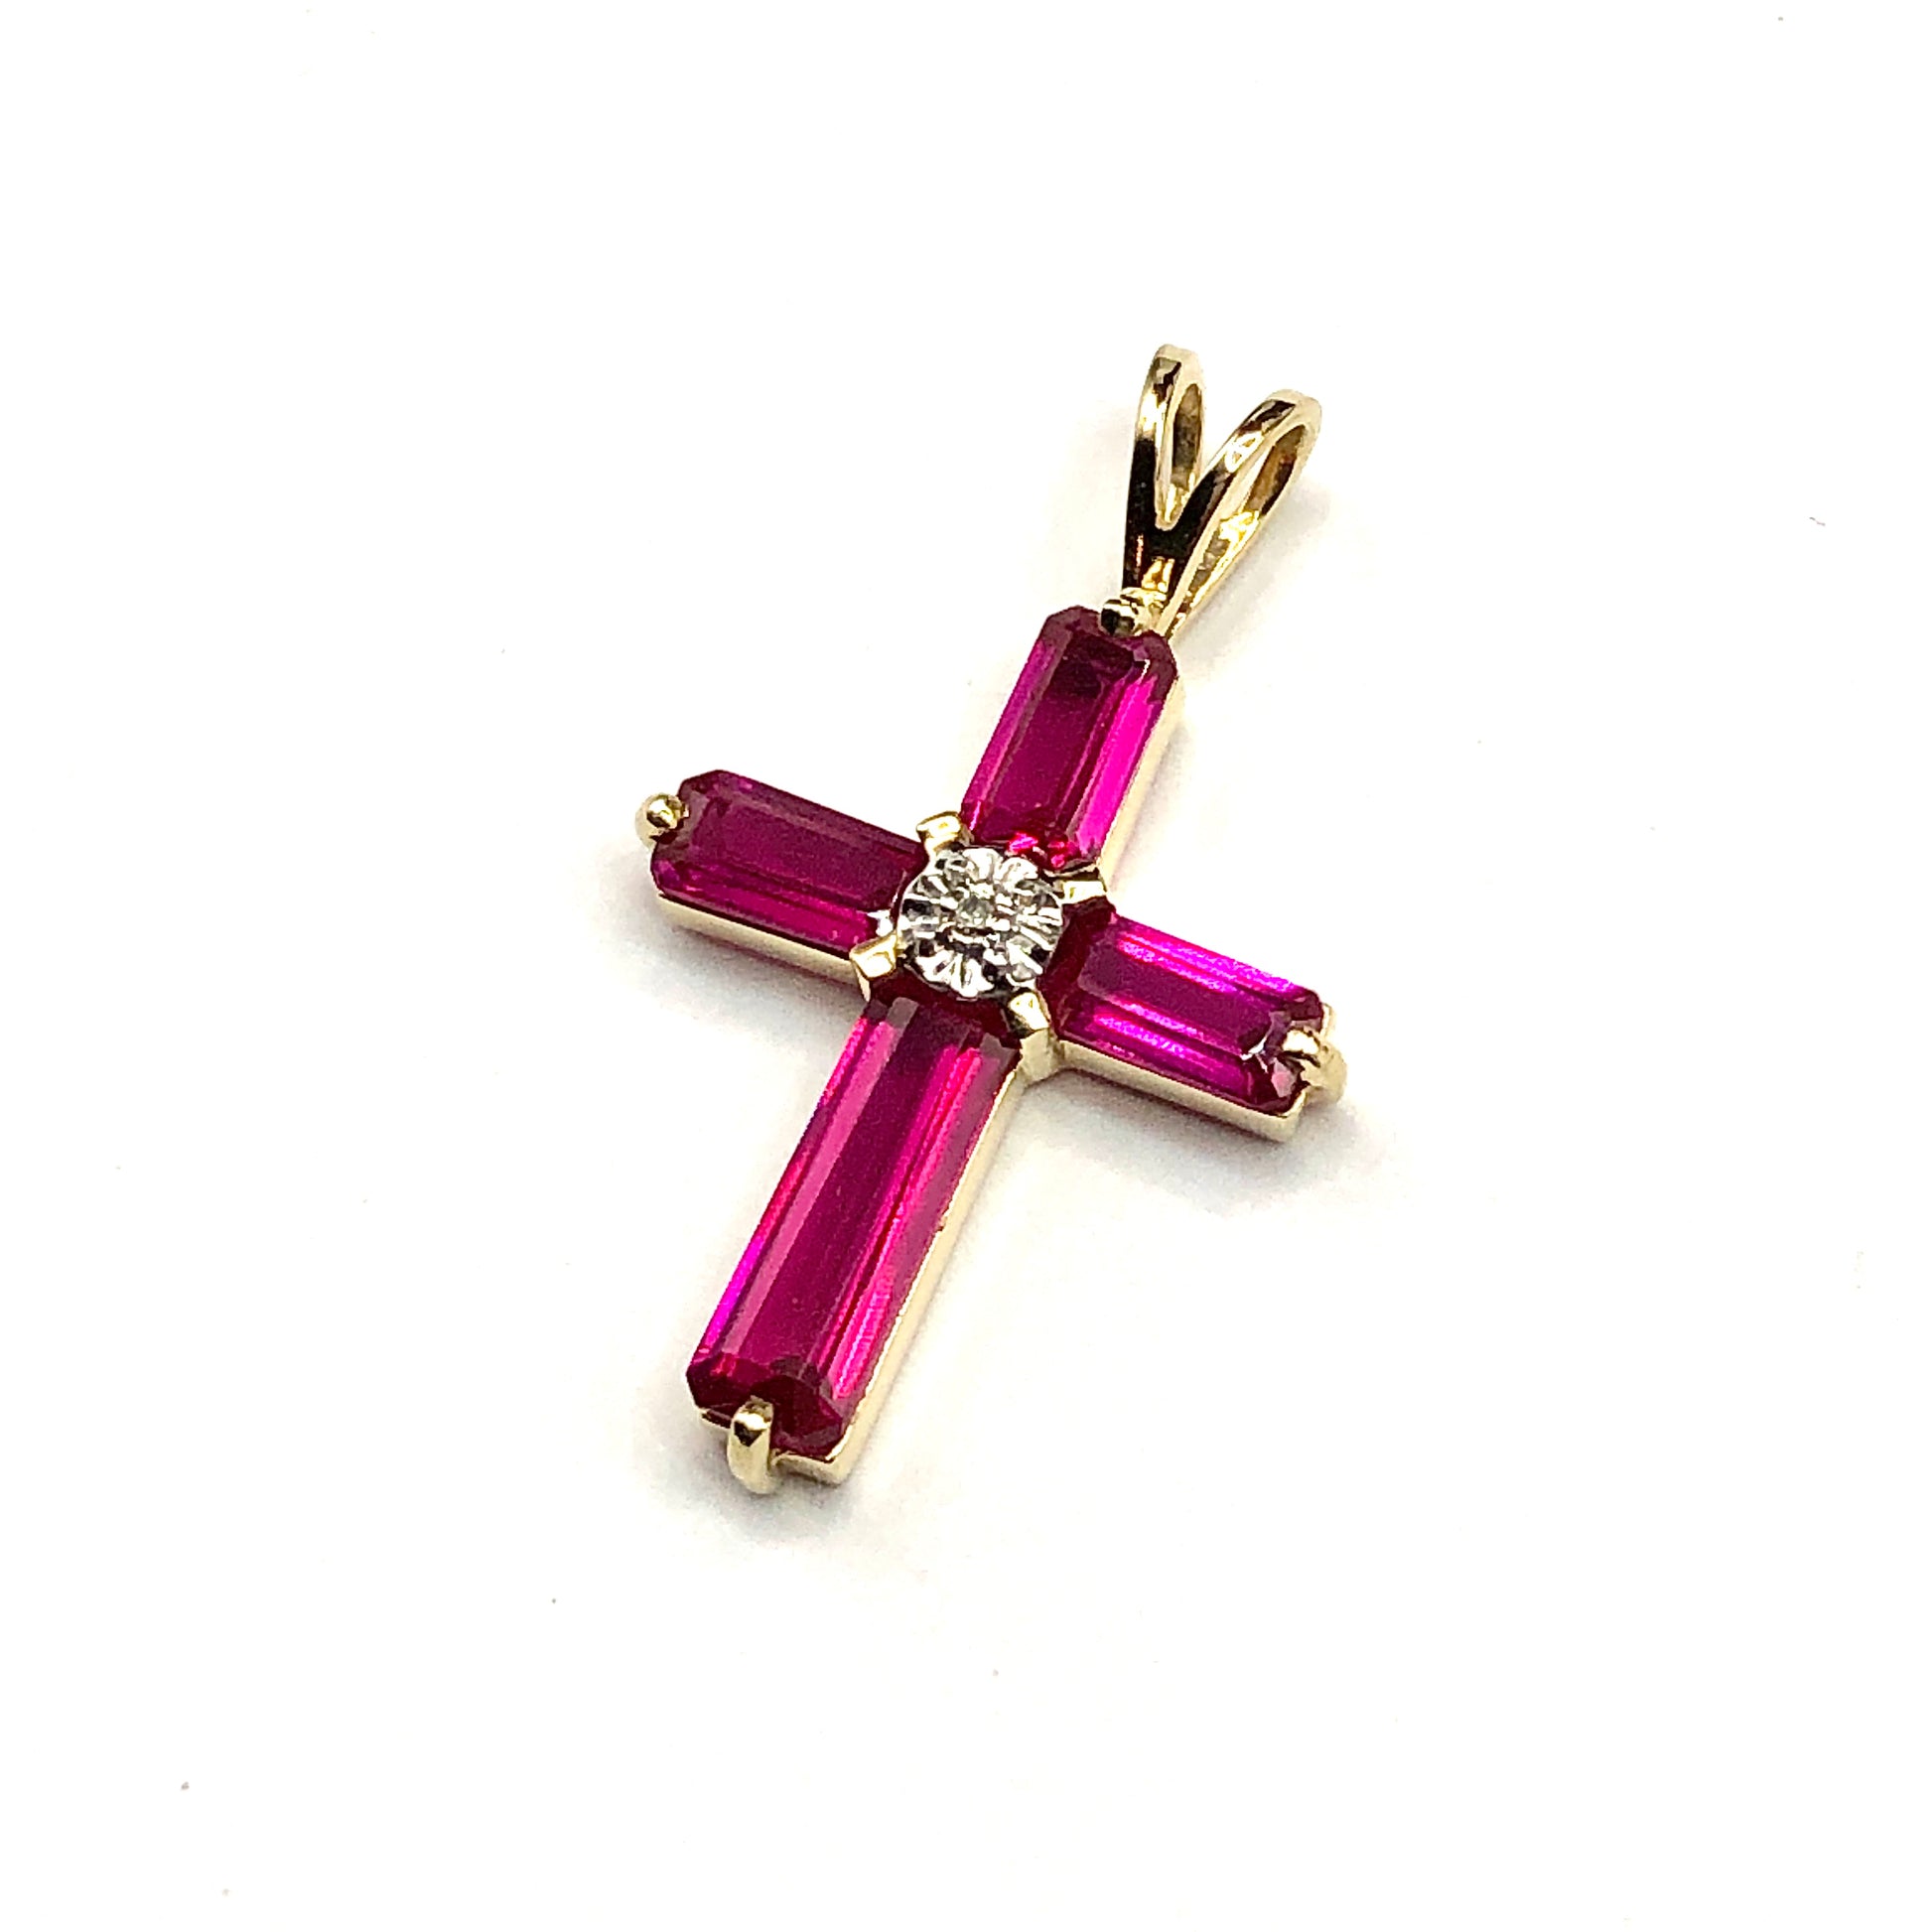 Blingschlingers Jewelry - Cross Pendant - Mens Womens 10k Gold Stunning Ruby Diamond Crucifix Pendant - Gemstone Religious Cross Pendant